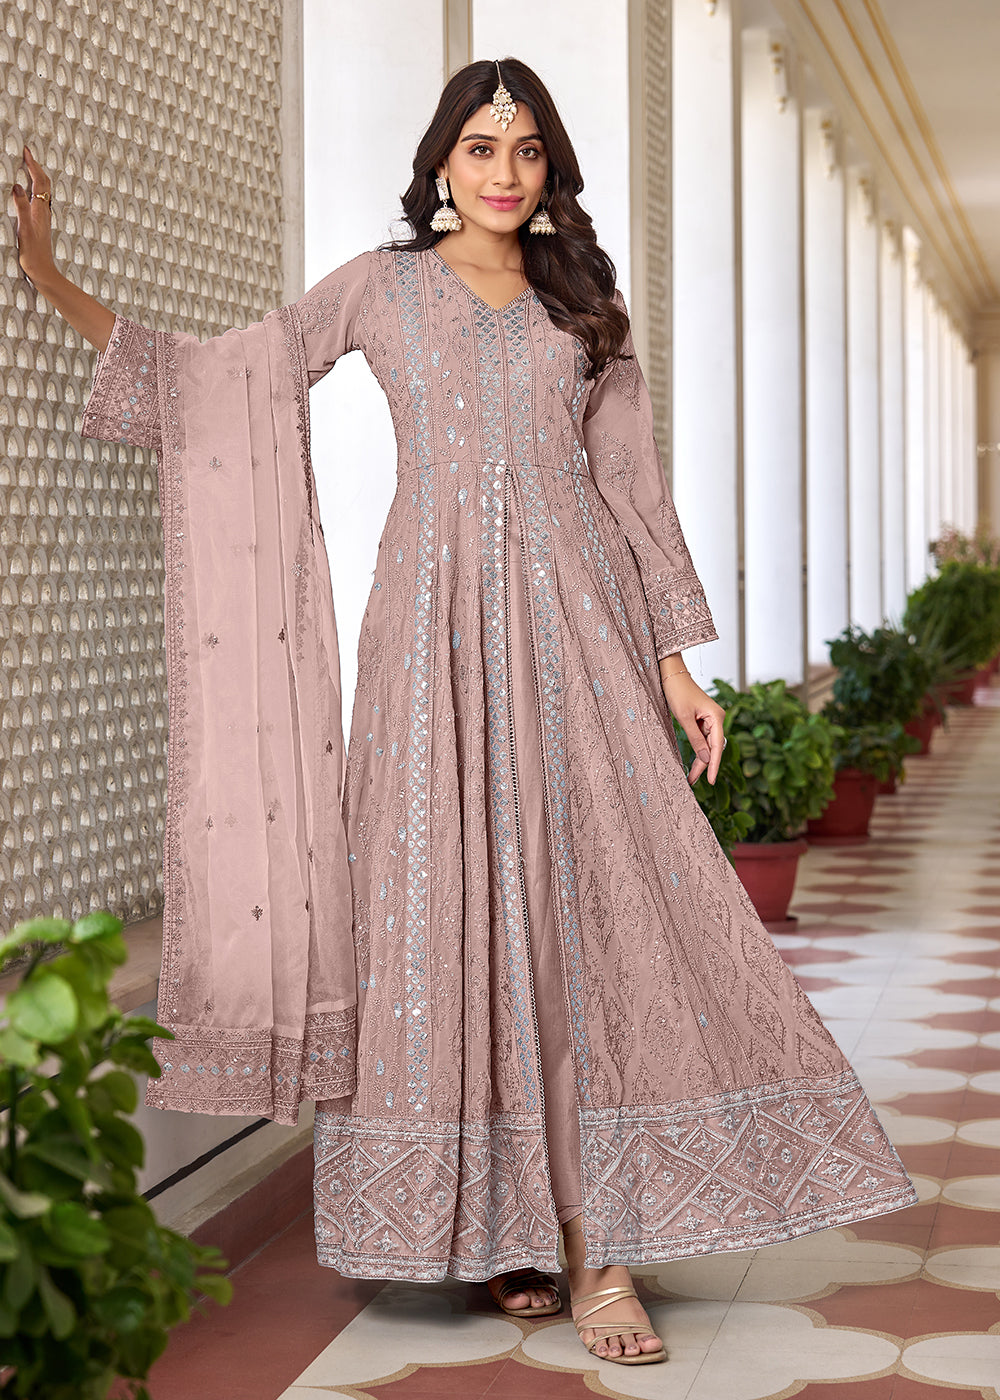 Buy Now Slit Style Pink Embroidered Wedding Festive Anarkali Suit Online in USA, UK, Australia, New Zealand, Canada & Worldwide at Empress Clothing.